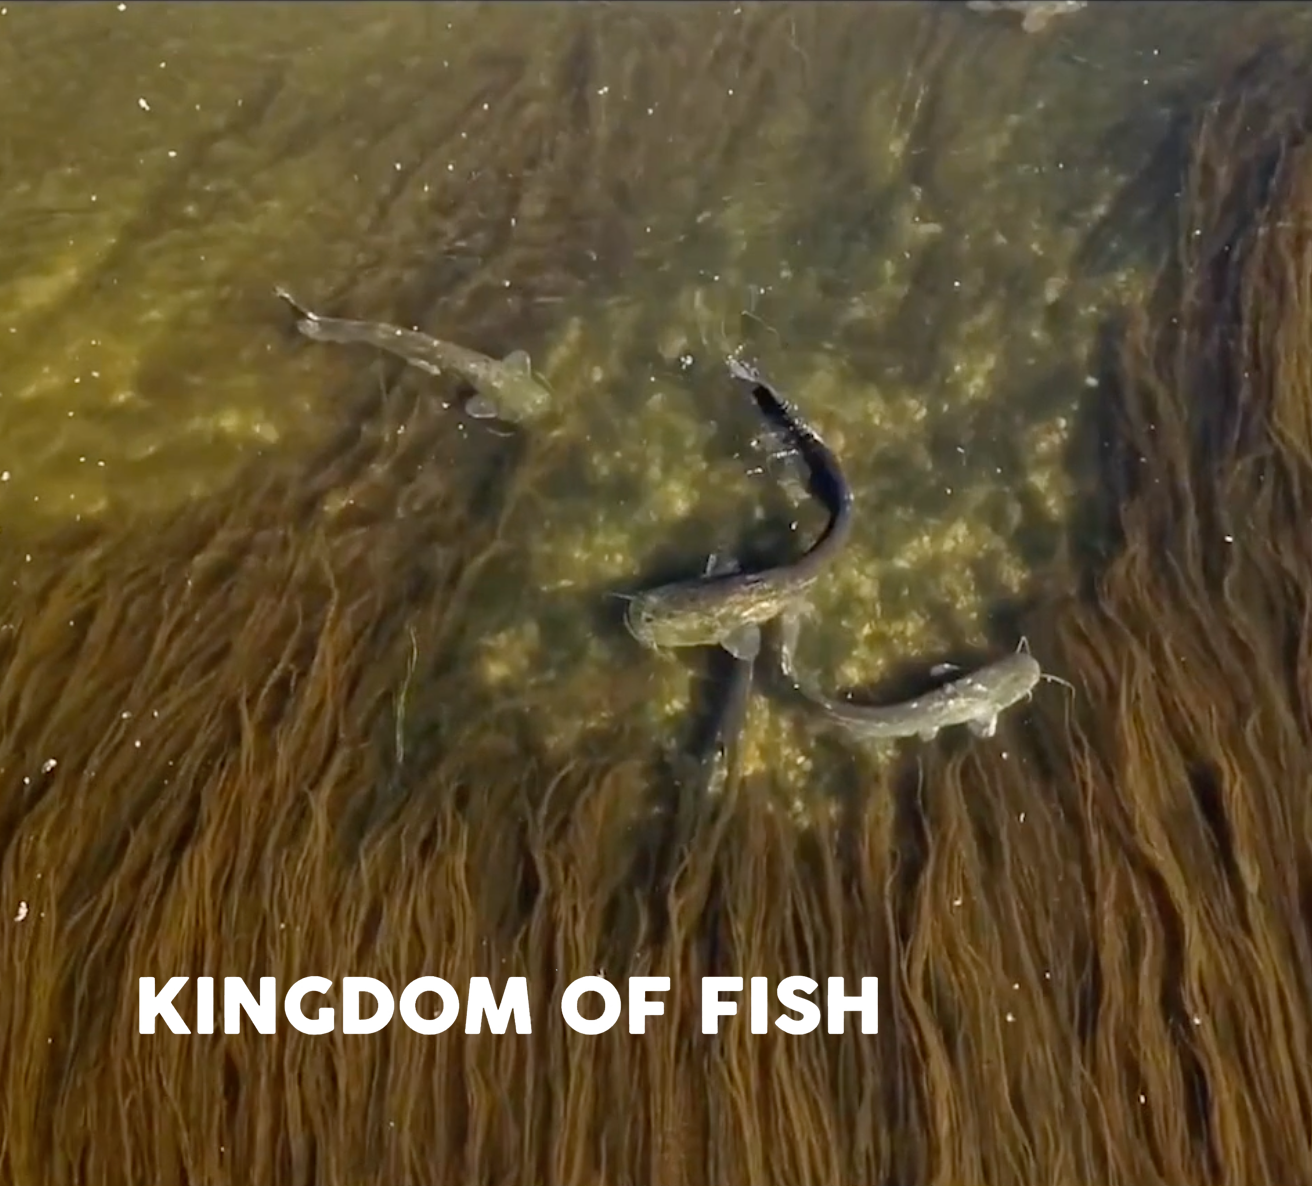 Kingdom of fish